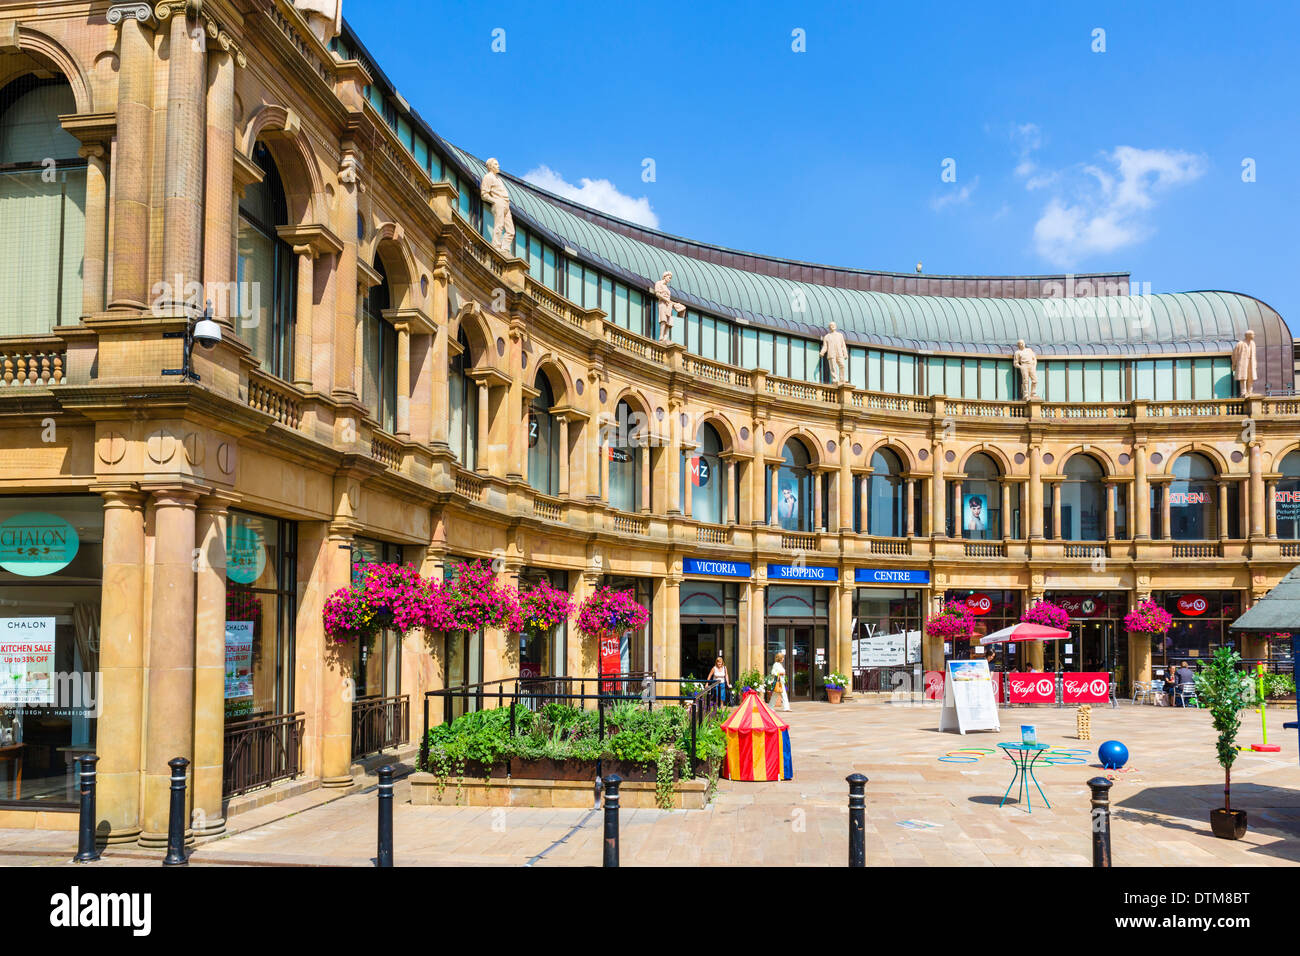 The Victoria Shopping Centre, Harrogate, North Yorkshire, England, UK Stock Photo